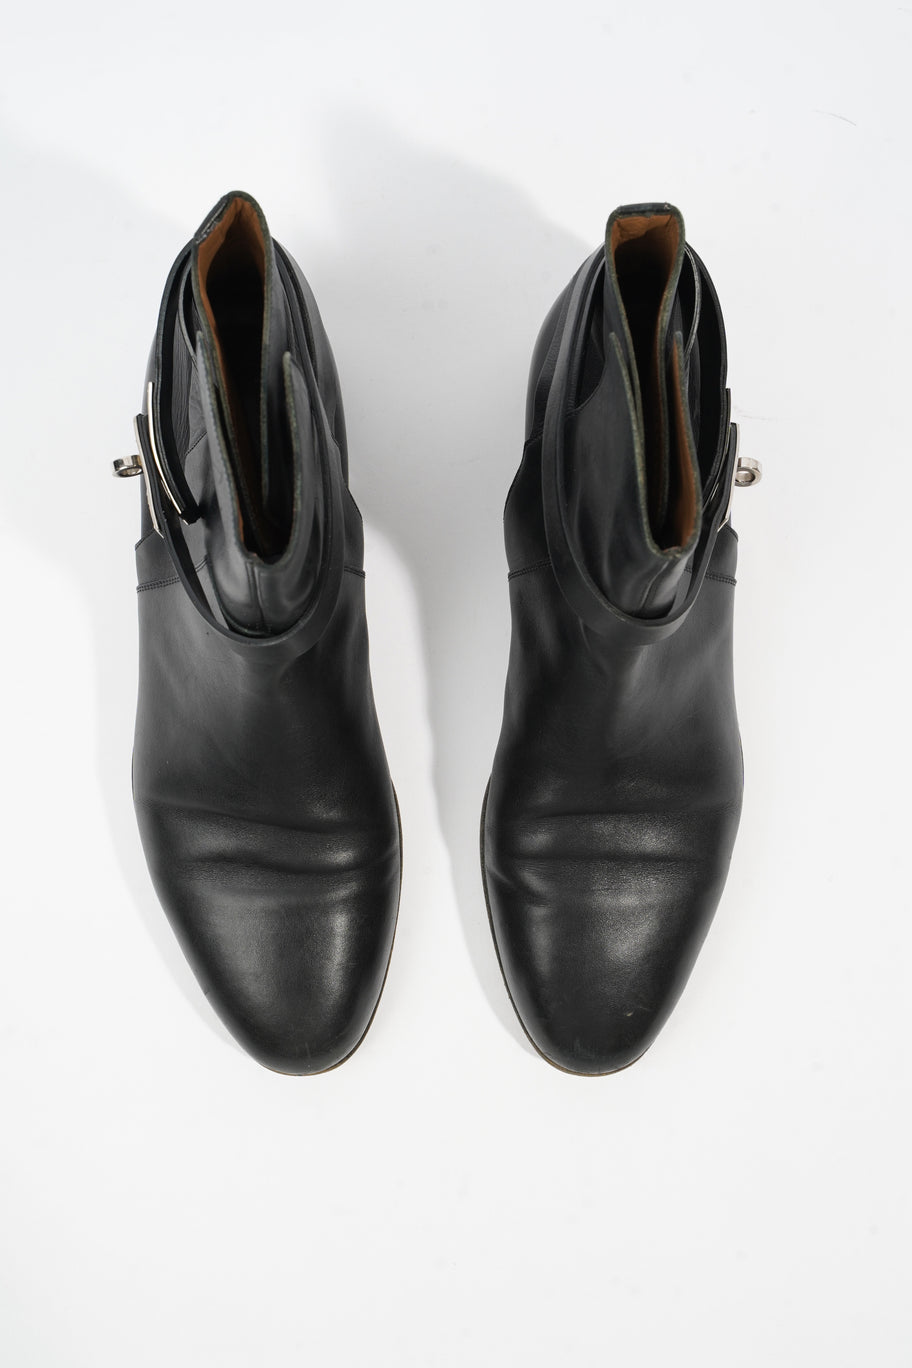 Neo Ankle Boot Black Leather EU 41 UK 8 Image 8